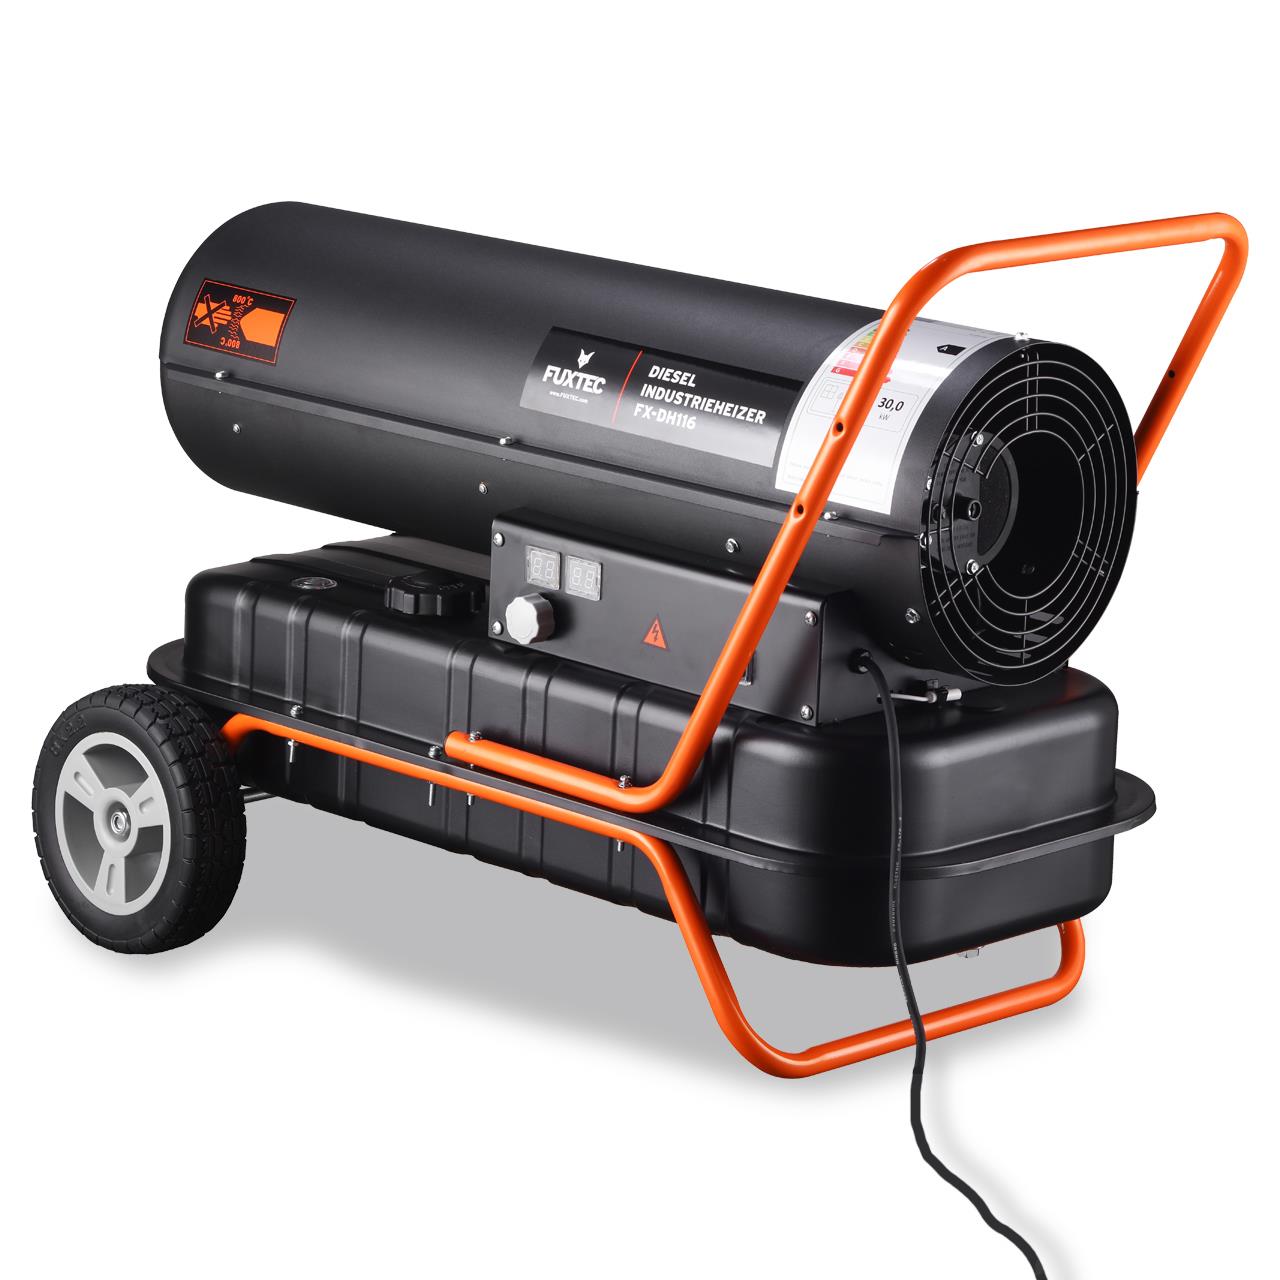 Diesel/Kerosene space heater FUXTEC DH116